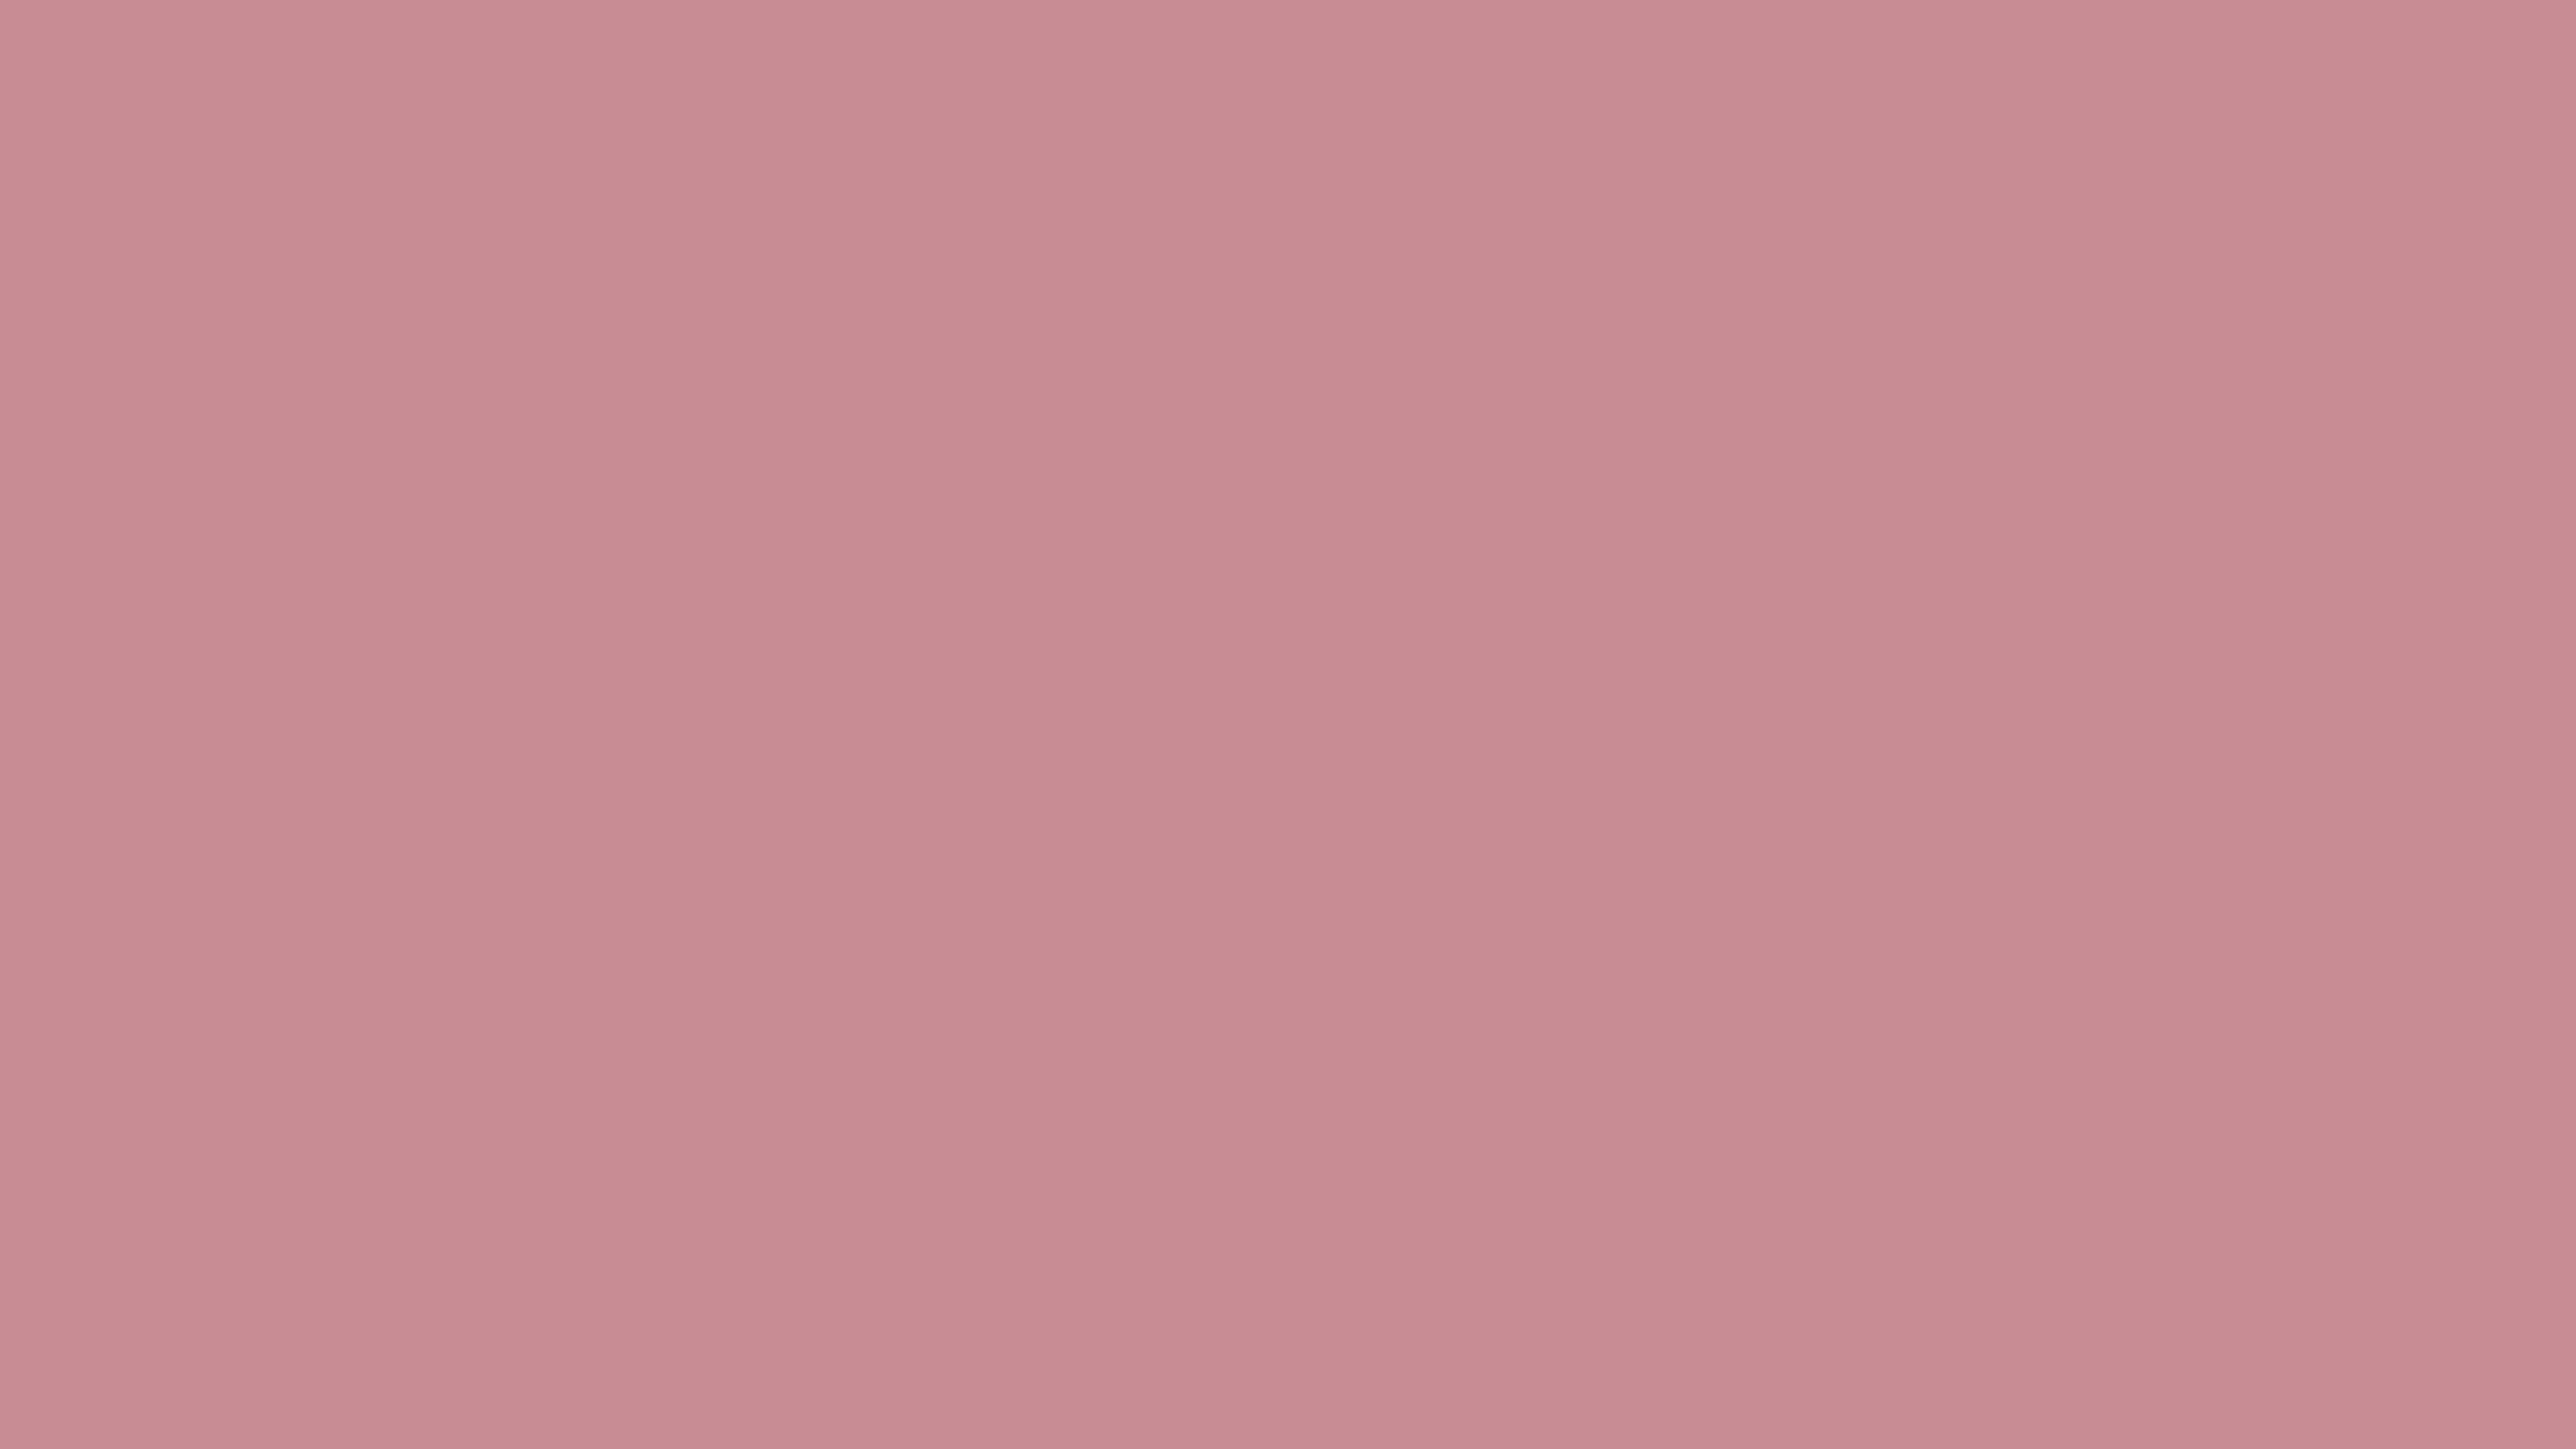 Pink Gray color hex code is #C1ADAE